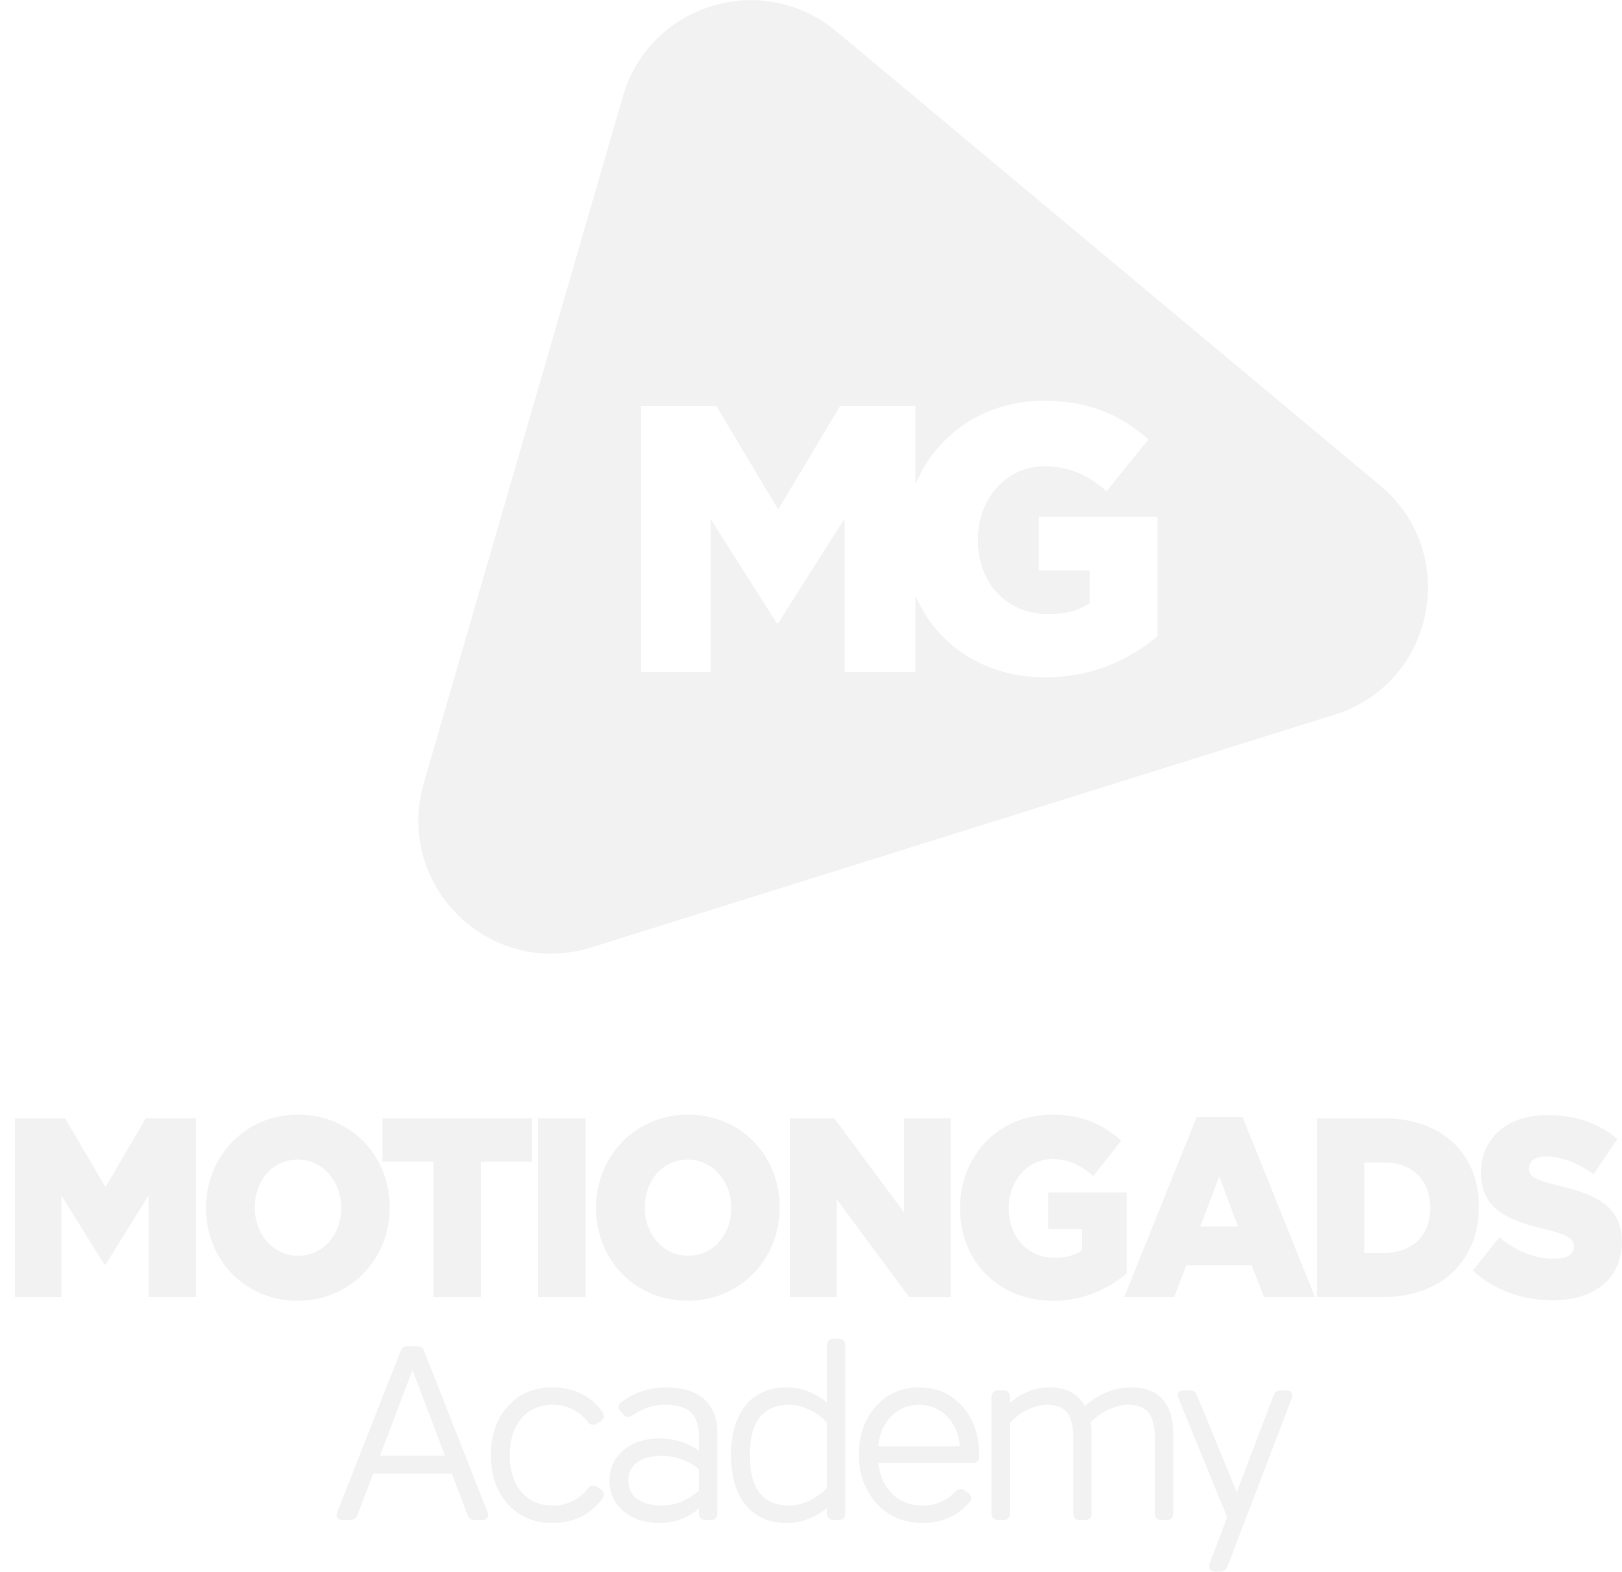 Motiongads Academy